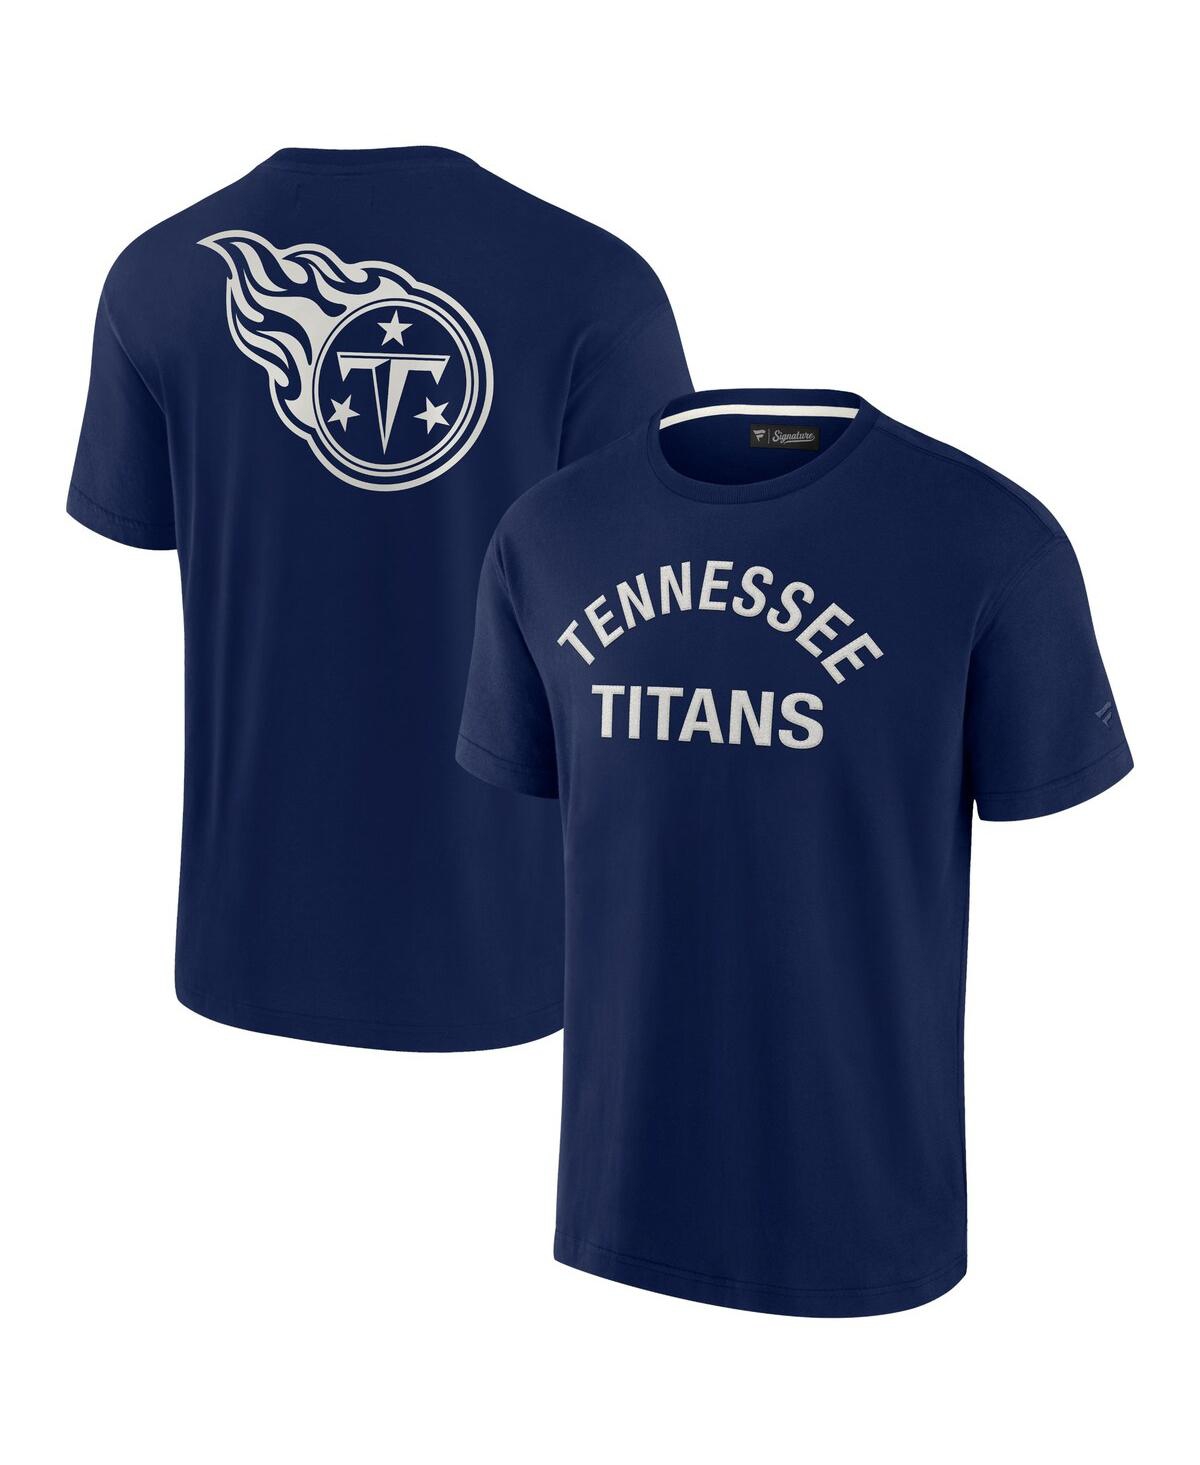 Shop Fanatics Signature Men's And Women's  Navy Tennessee Titans Super Soft Short Sleeve T-shirt